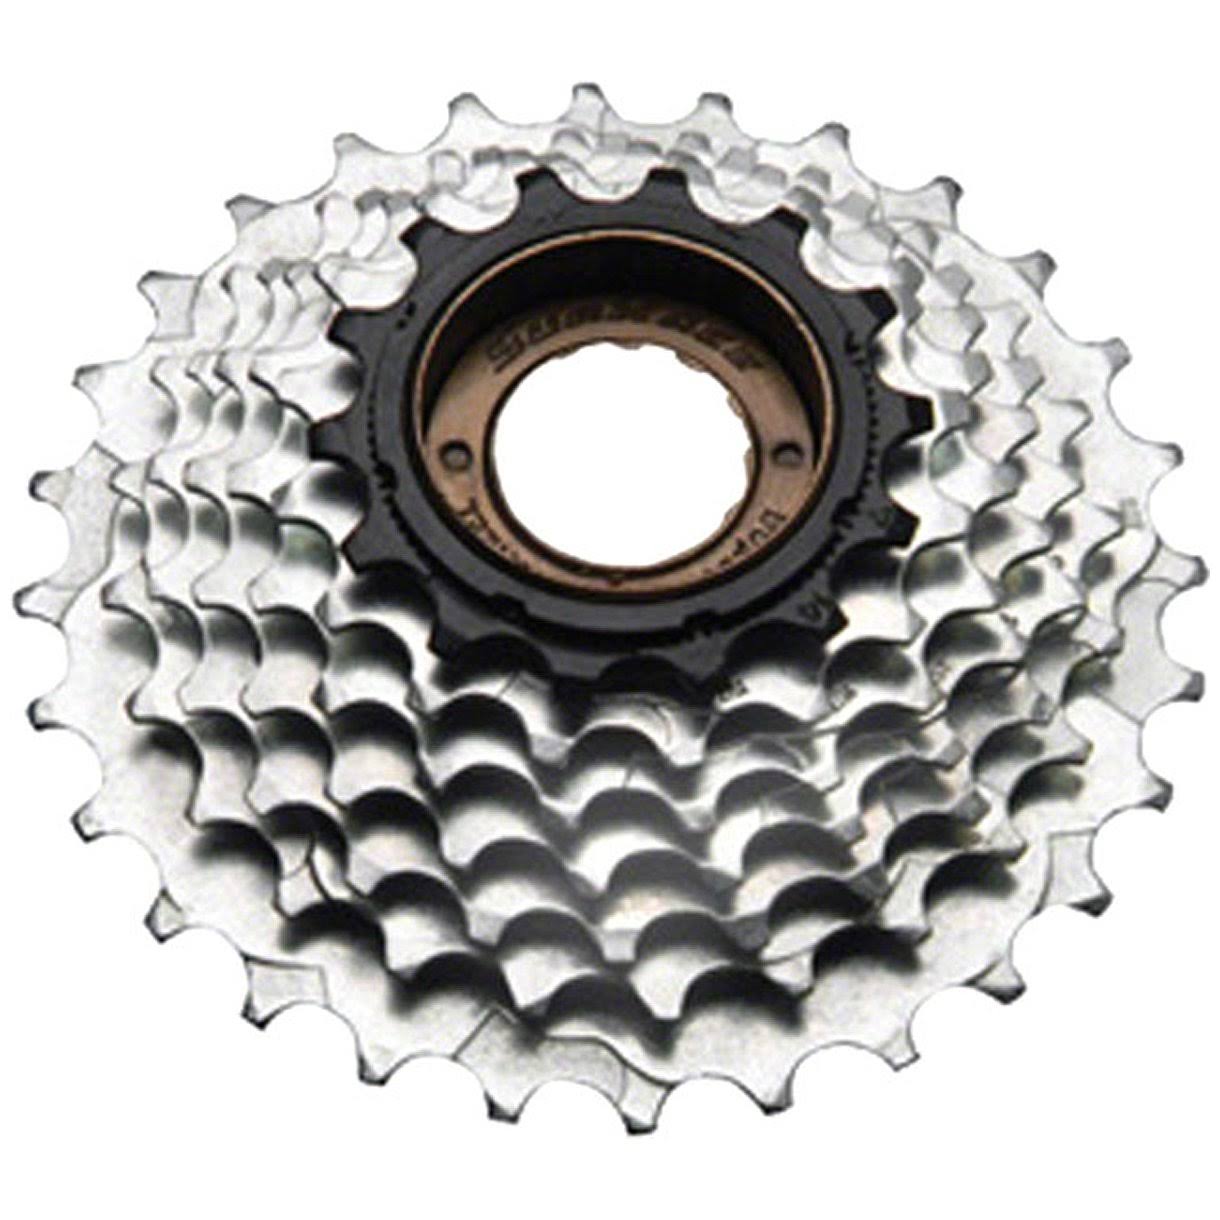 SunRace M2A Bicycle Freewheel - Black and Zinc, 5 Speed, 14 Teeth to 28 Teeth